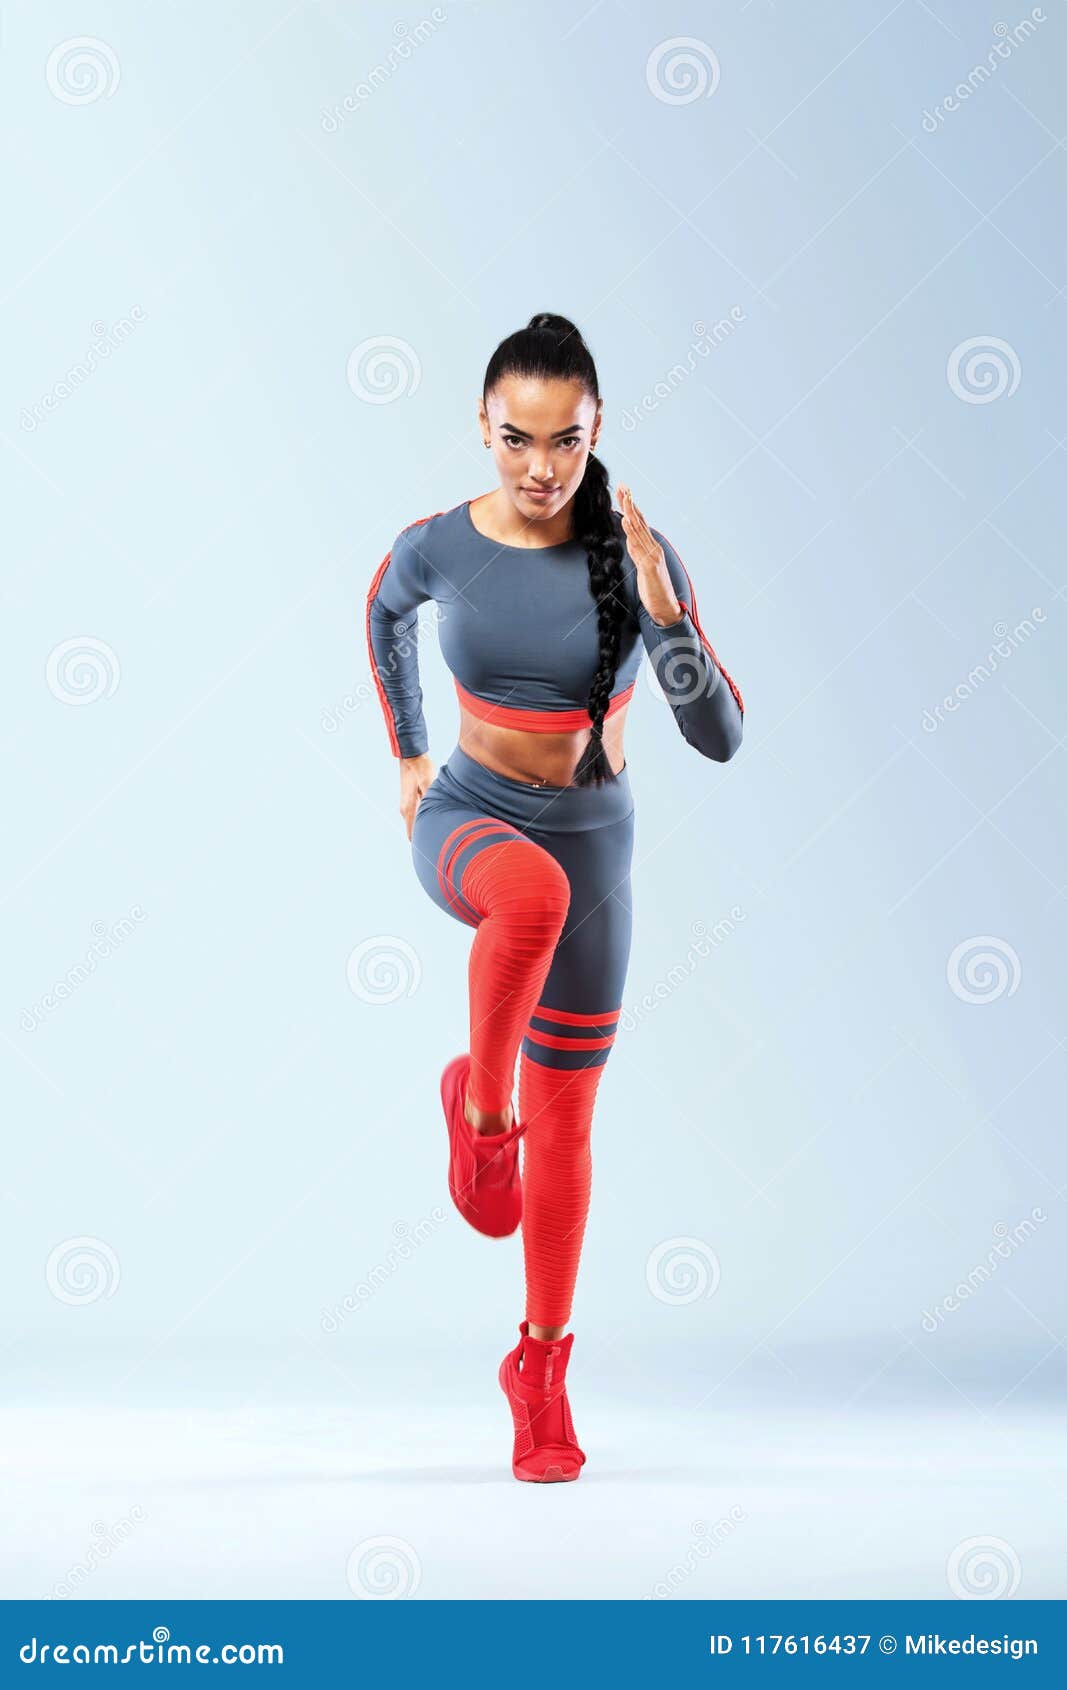 https://thumbs.dreamstime.com/z/strong-athletic-women-sprinter-running-wearing-sportswear-fitness-sport-motivation-runner-concept-female-117616437.jpg